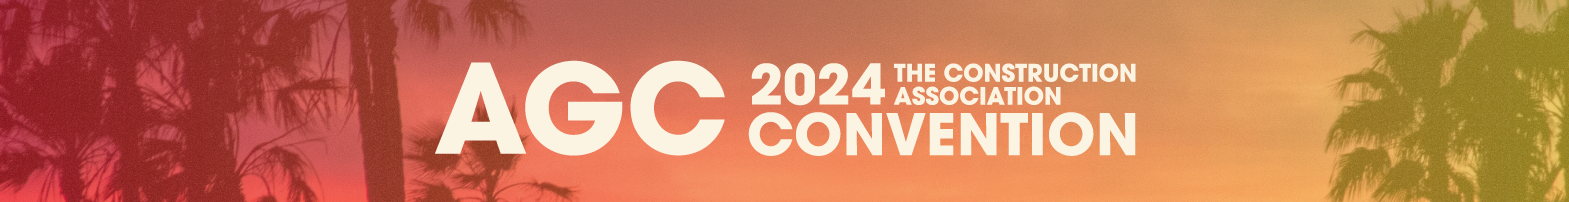 AGC 2024 Convention